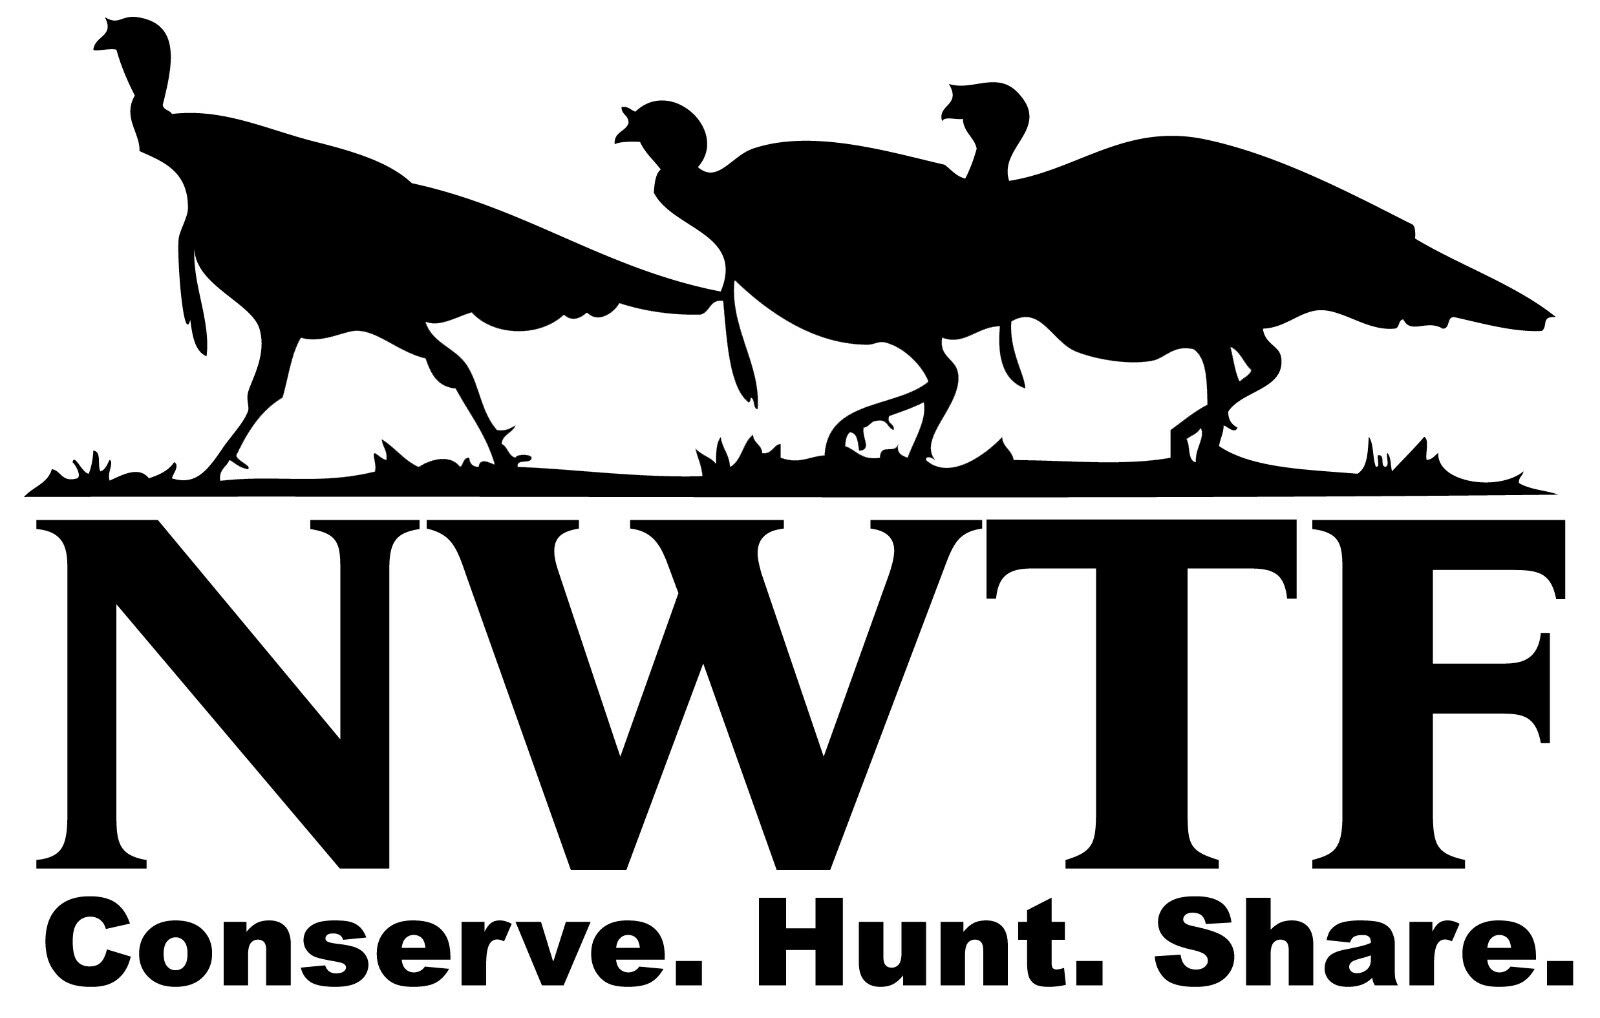 NWTF LOGO National Wild Turkey Federation Pro 2a Hunting NRA Vinyl Decal Sticker